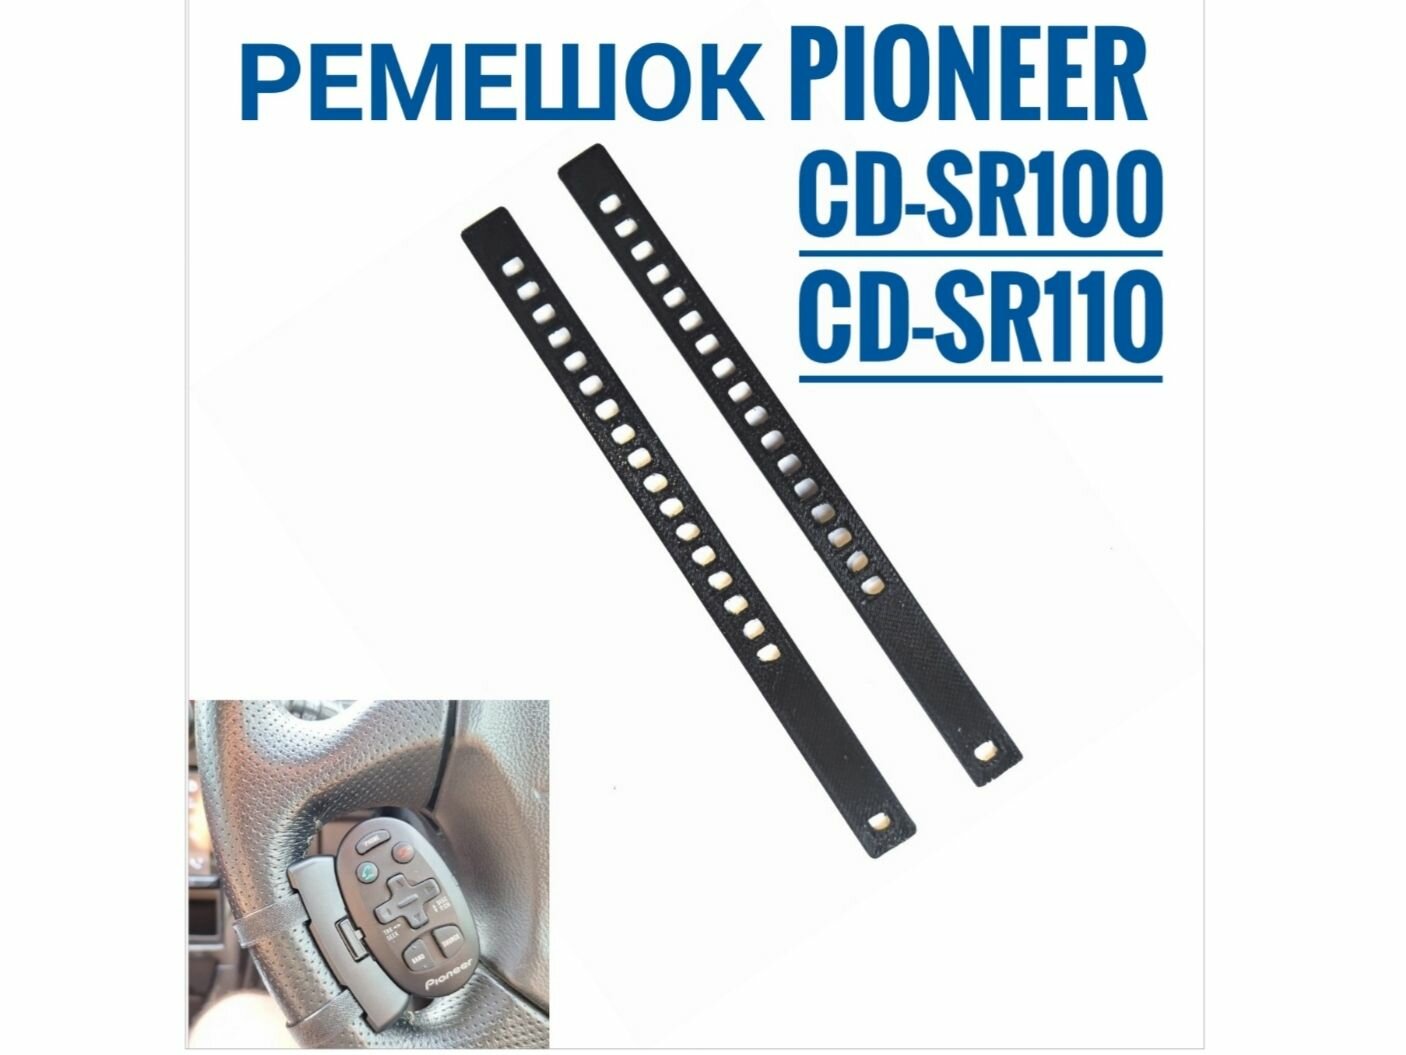 Ремешок на пульт Pioneer CD-SR100 /CD-SR110